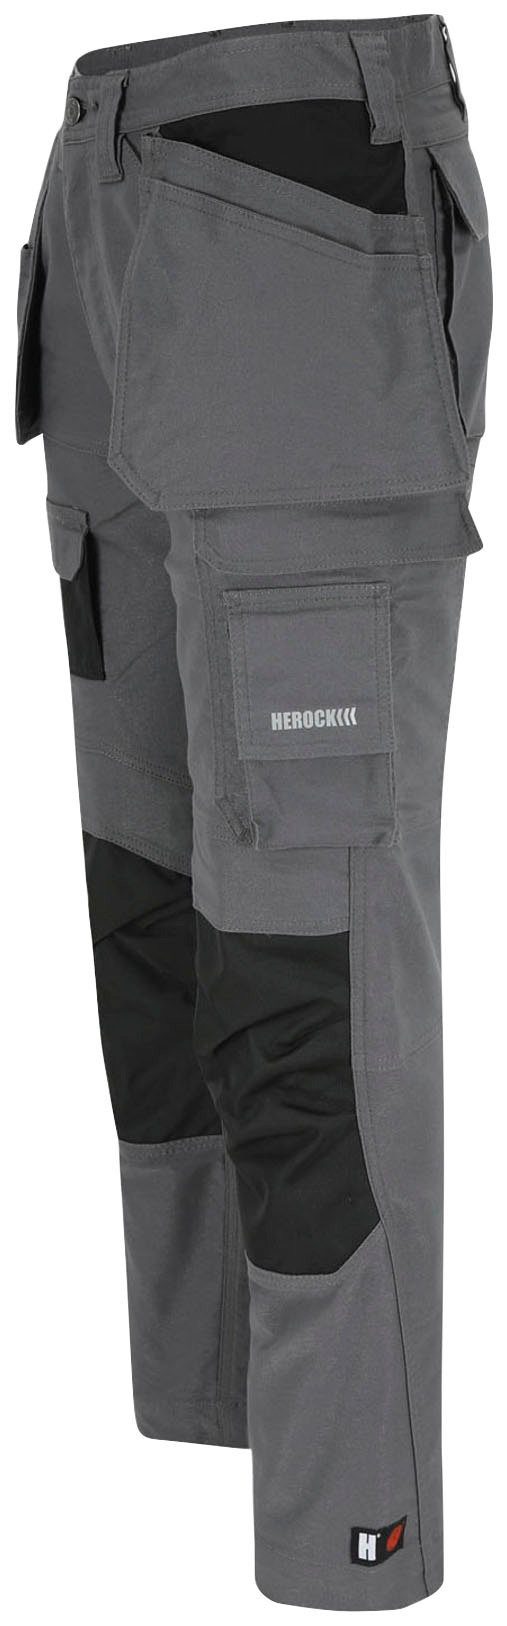 HEROCLES Stretch, Technologie) Multi-pocket, Arbeitshose robust, (Coolmax® Nageltaschen sehr feste grau Herock